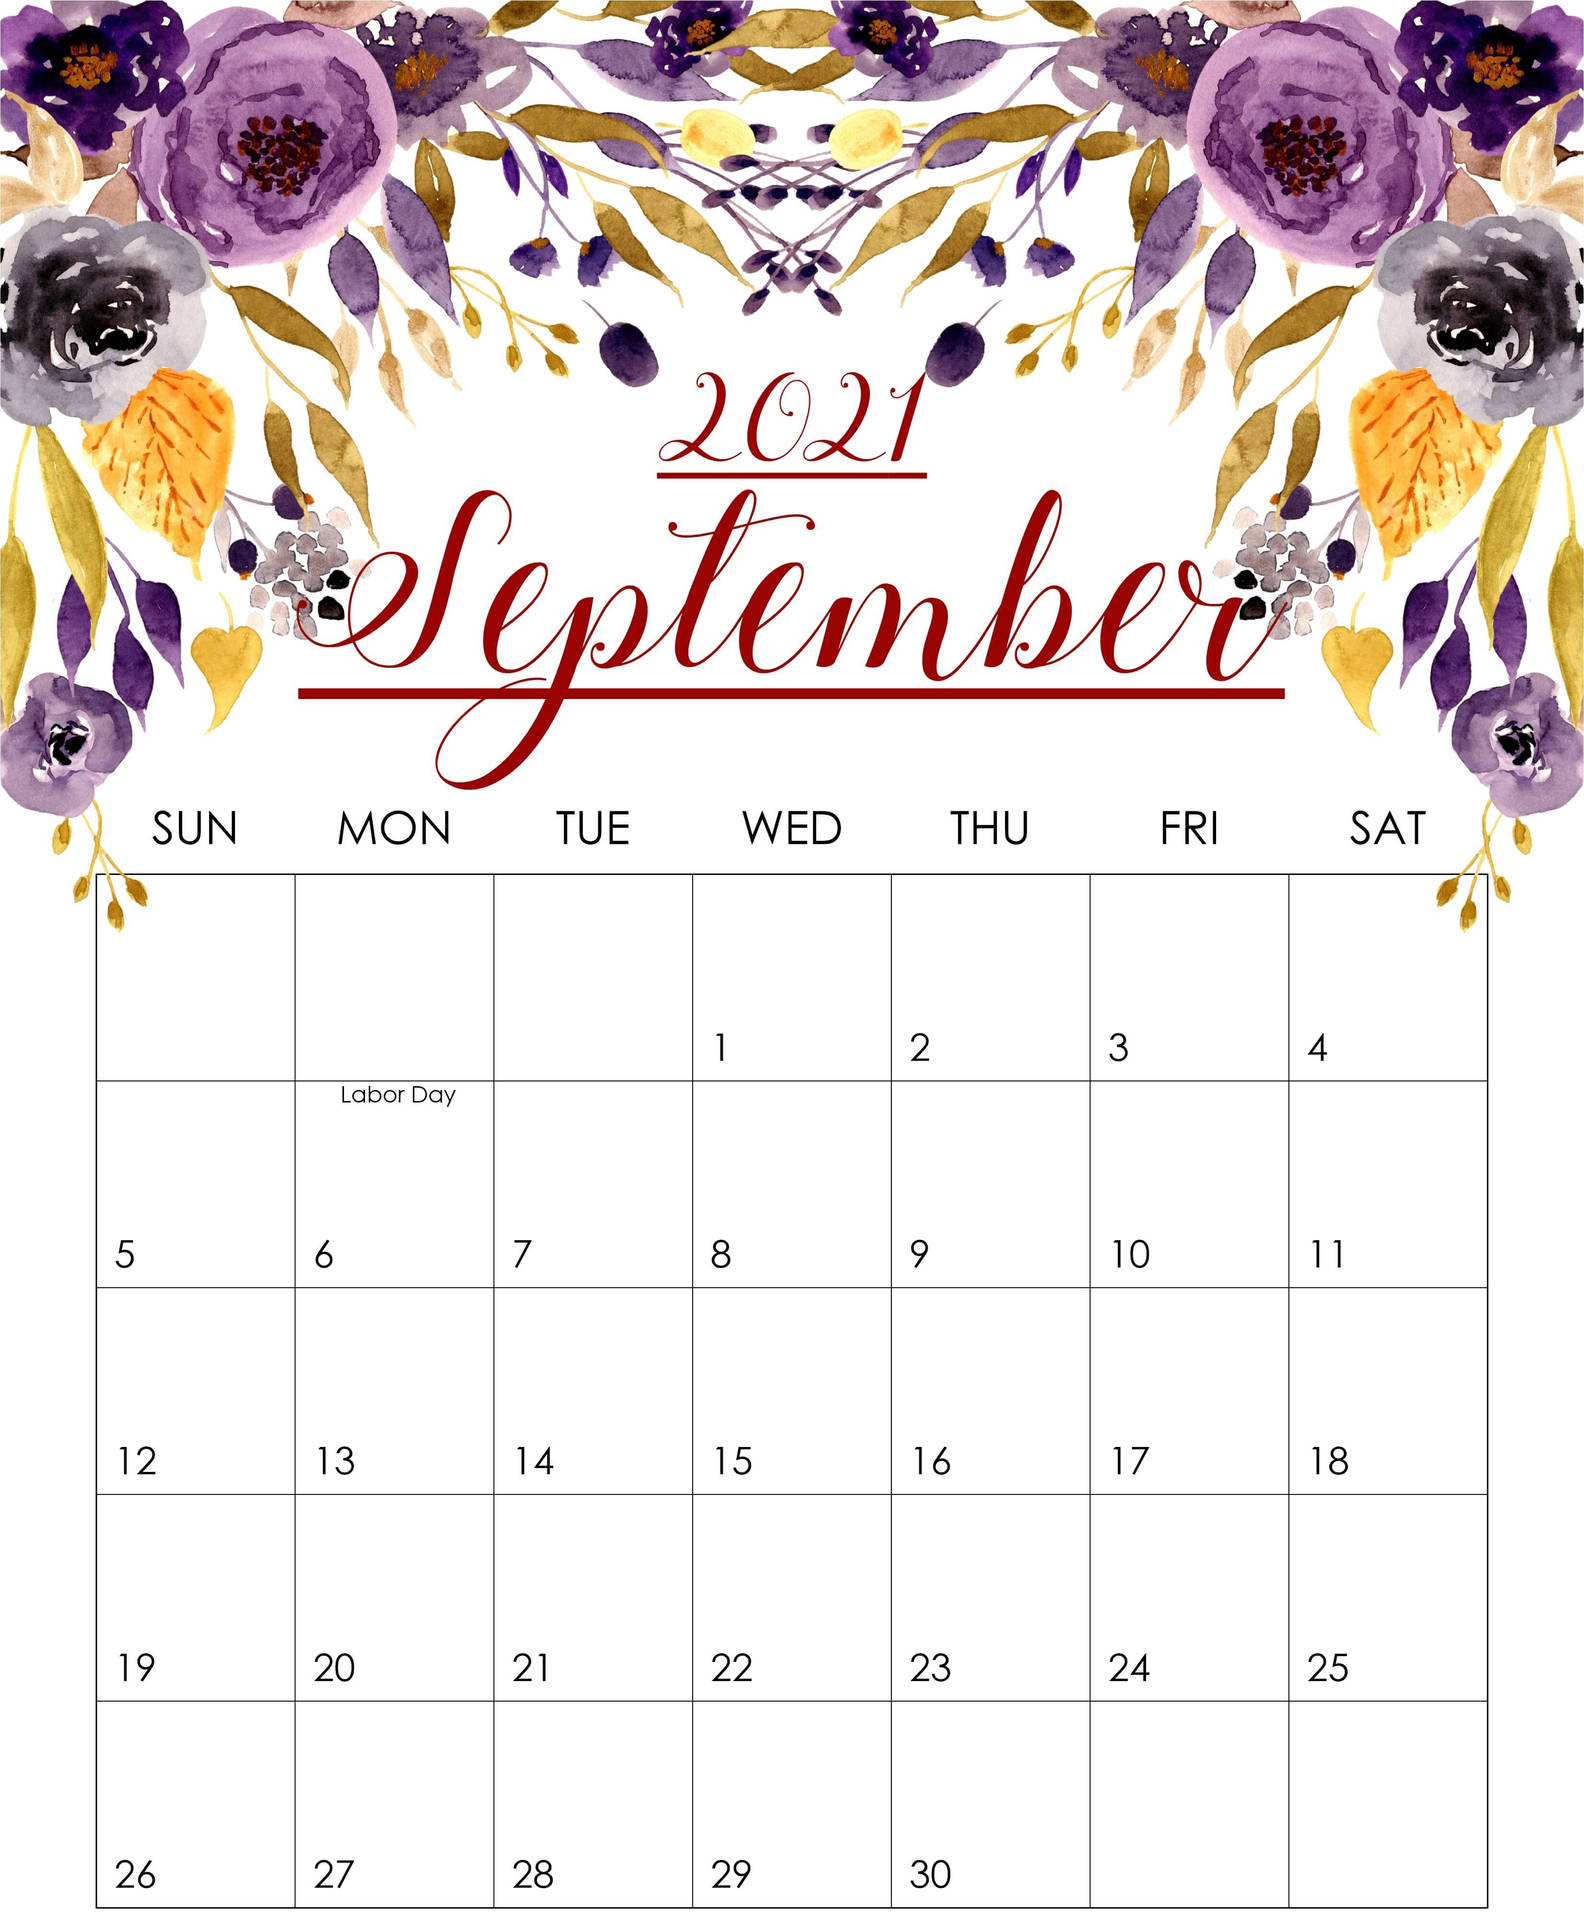 September 2021 Purple Flowers Calendar Wallpaper